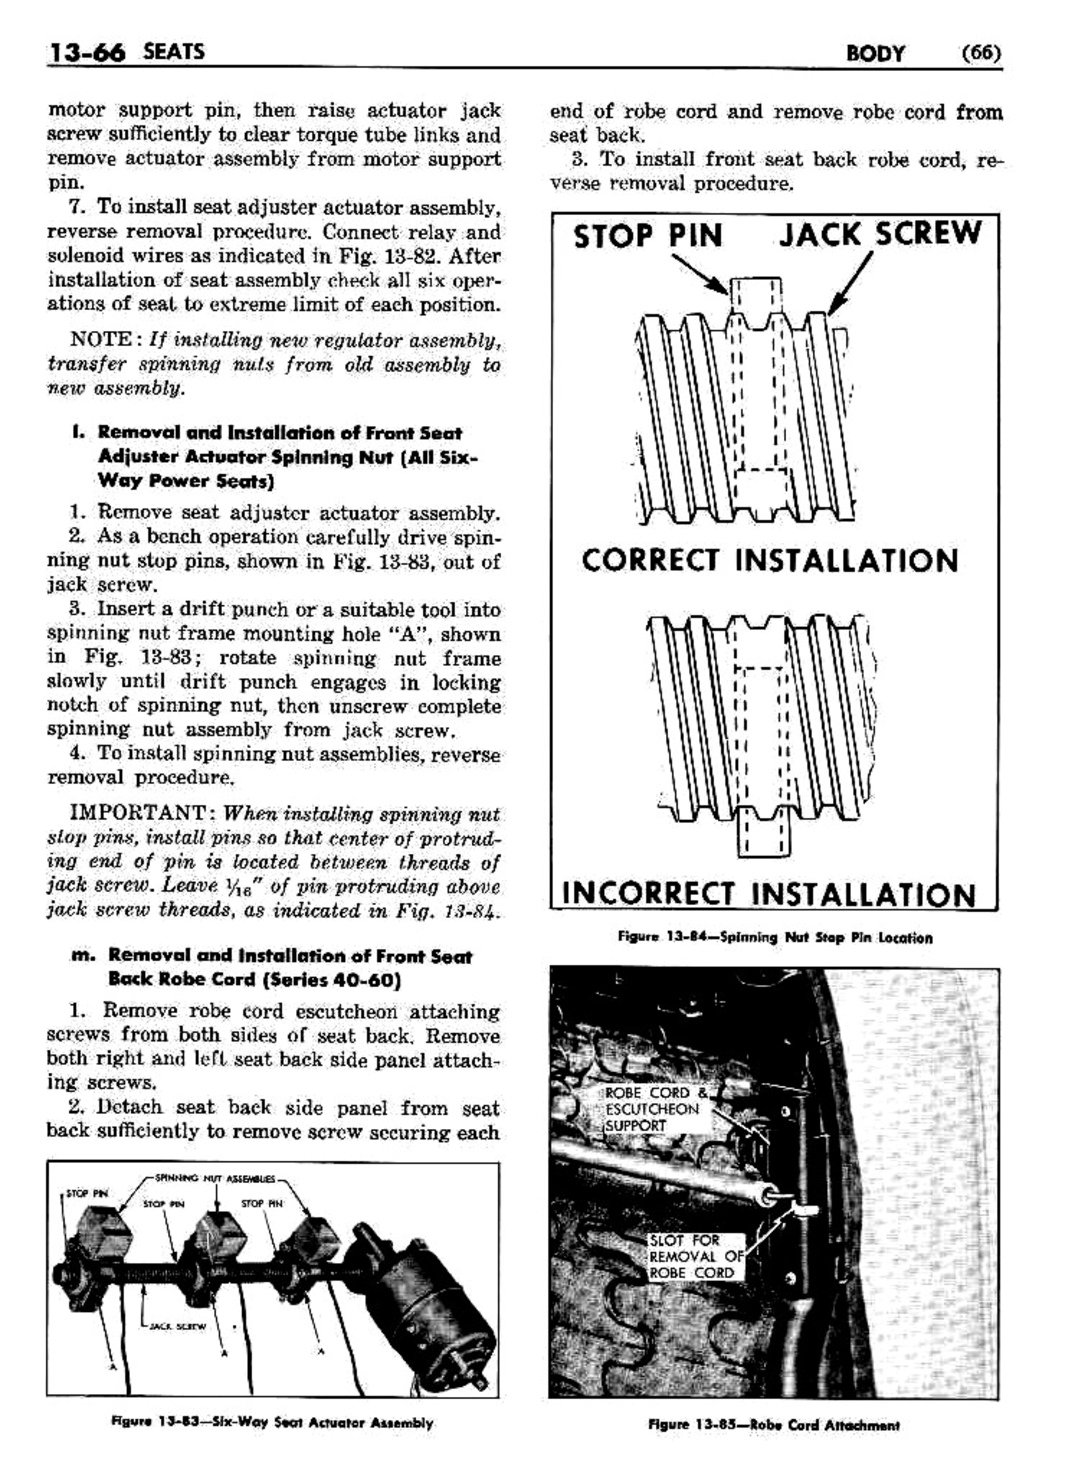 n_1958 Buick Body Service Manual-067-067.jpg